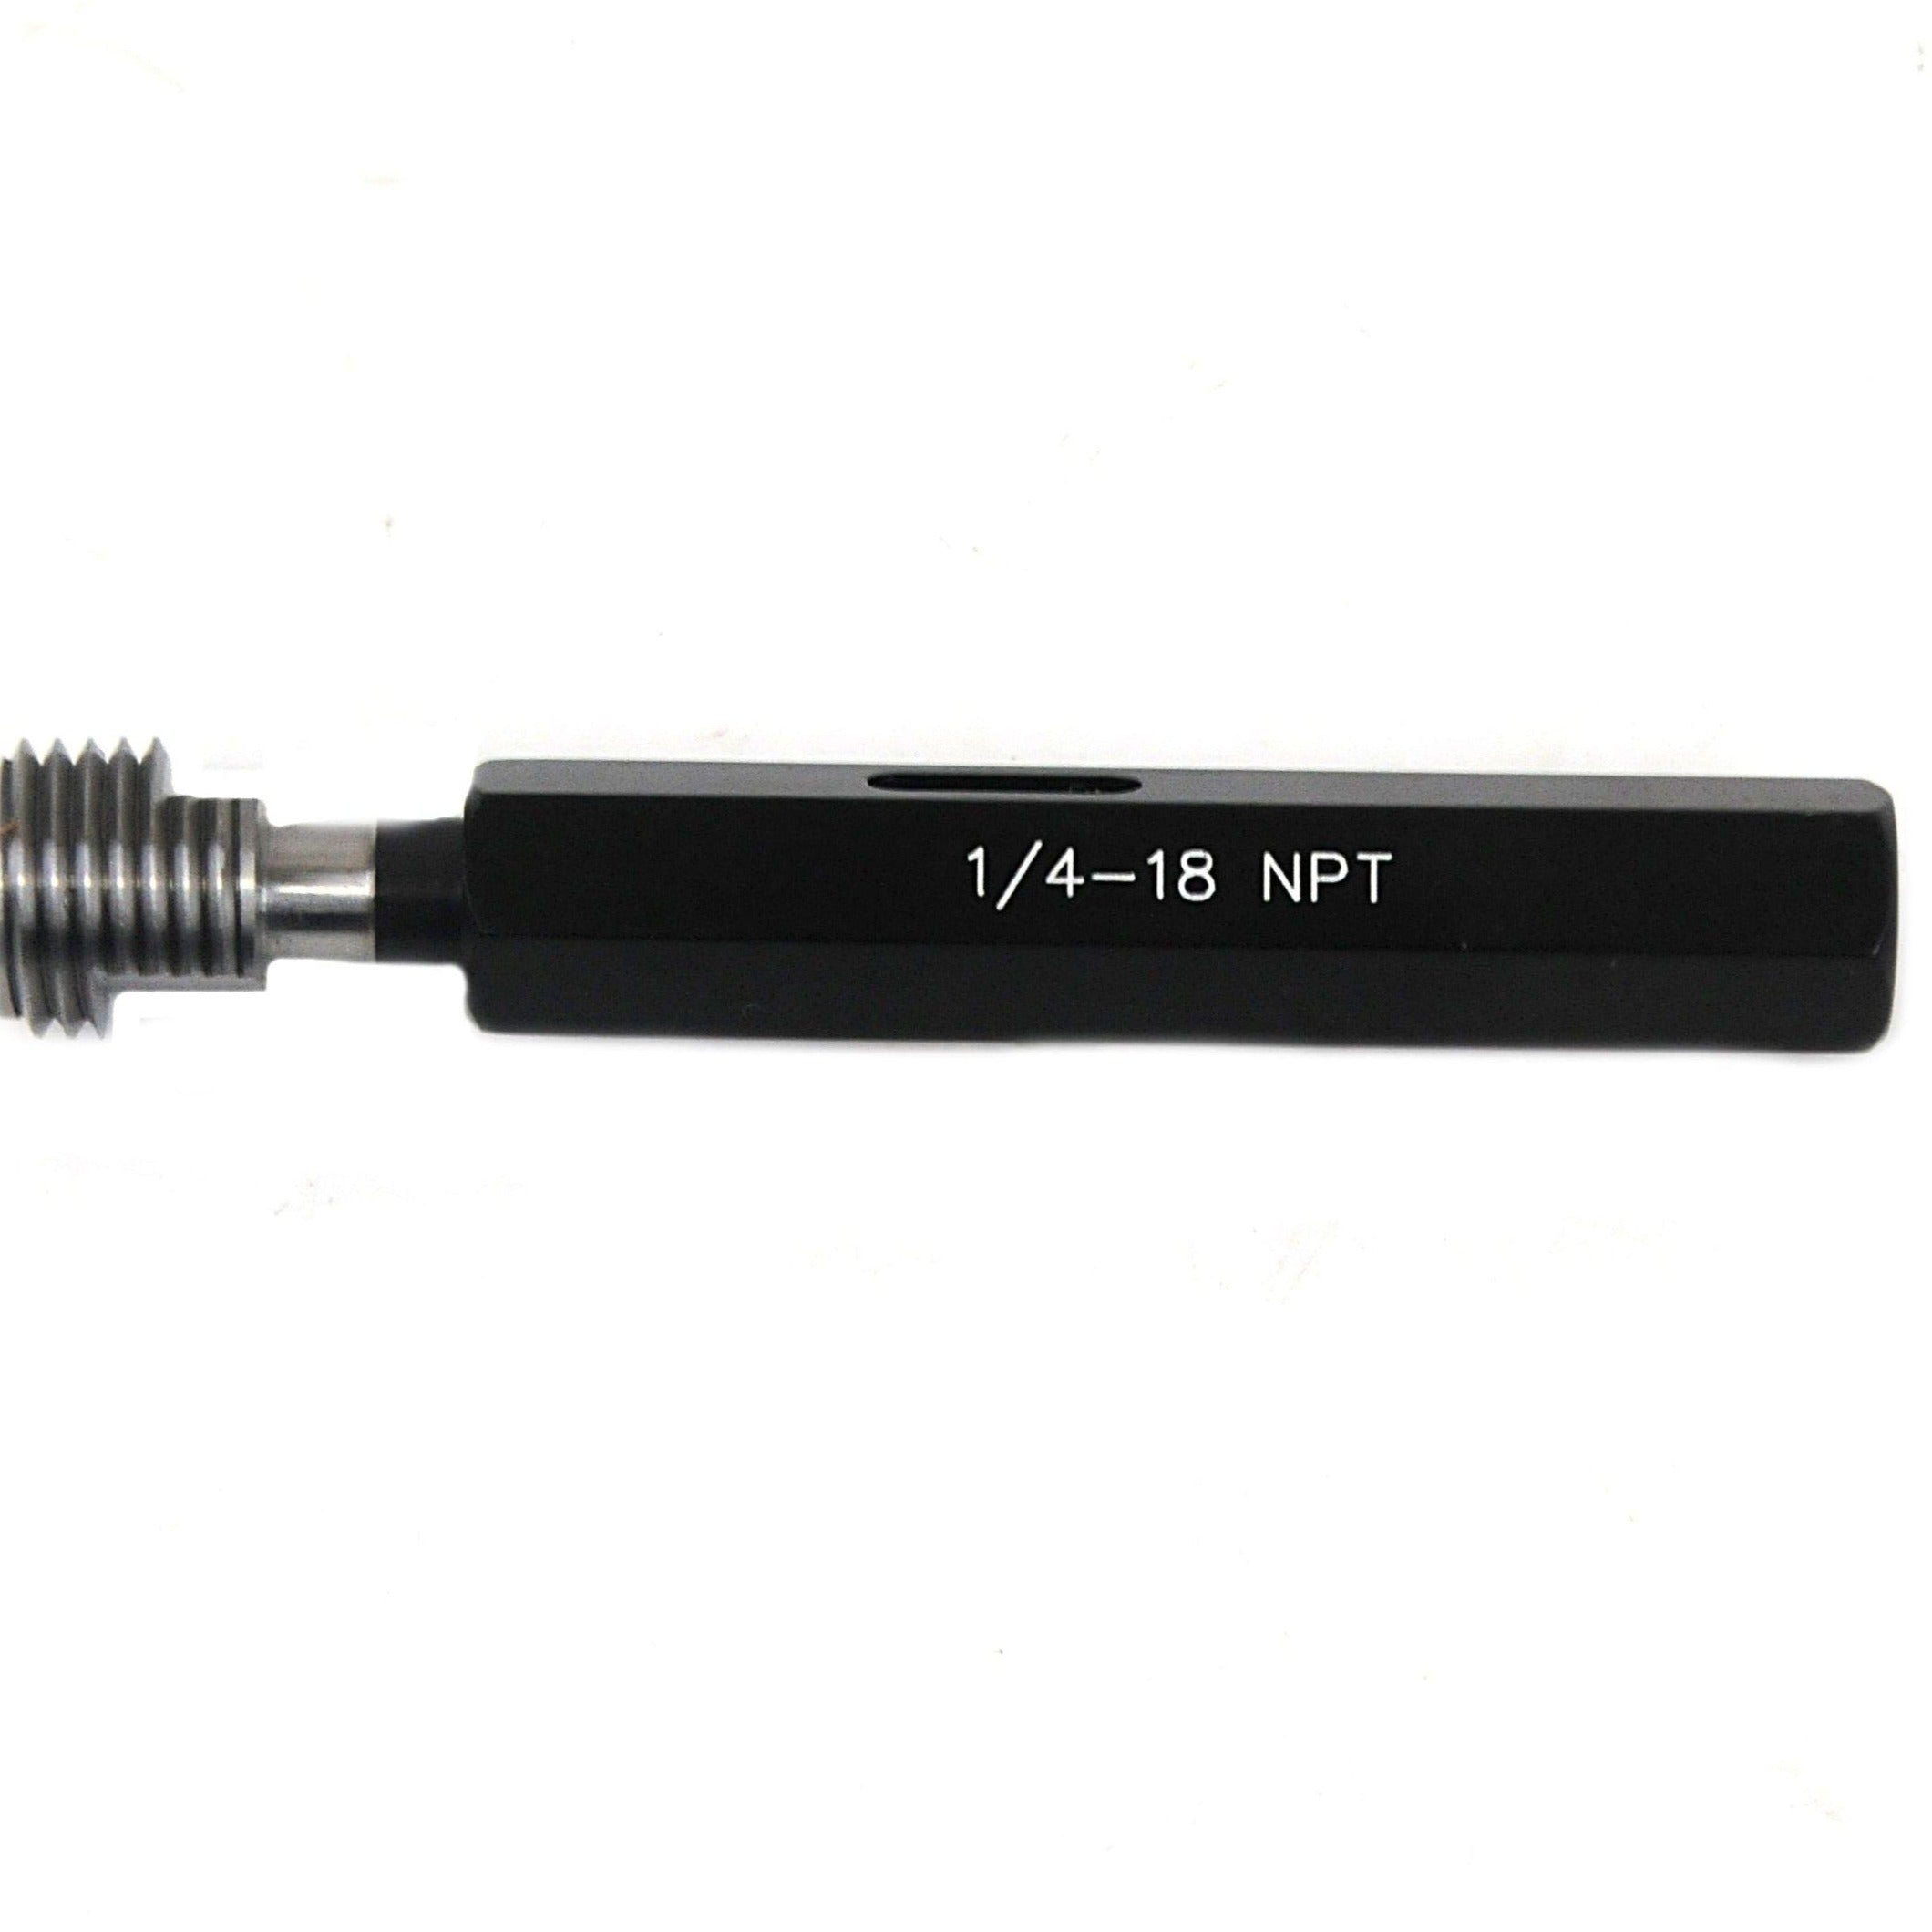 Insize Thread Plug Gauge 1/4"-18 NPT Series - 4644-1B18